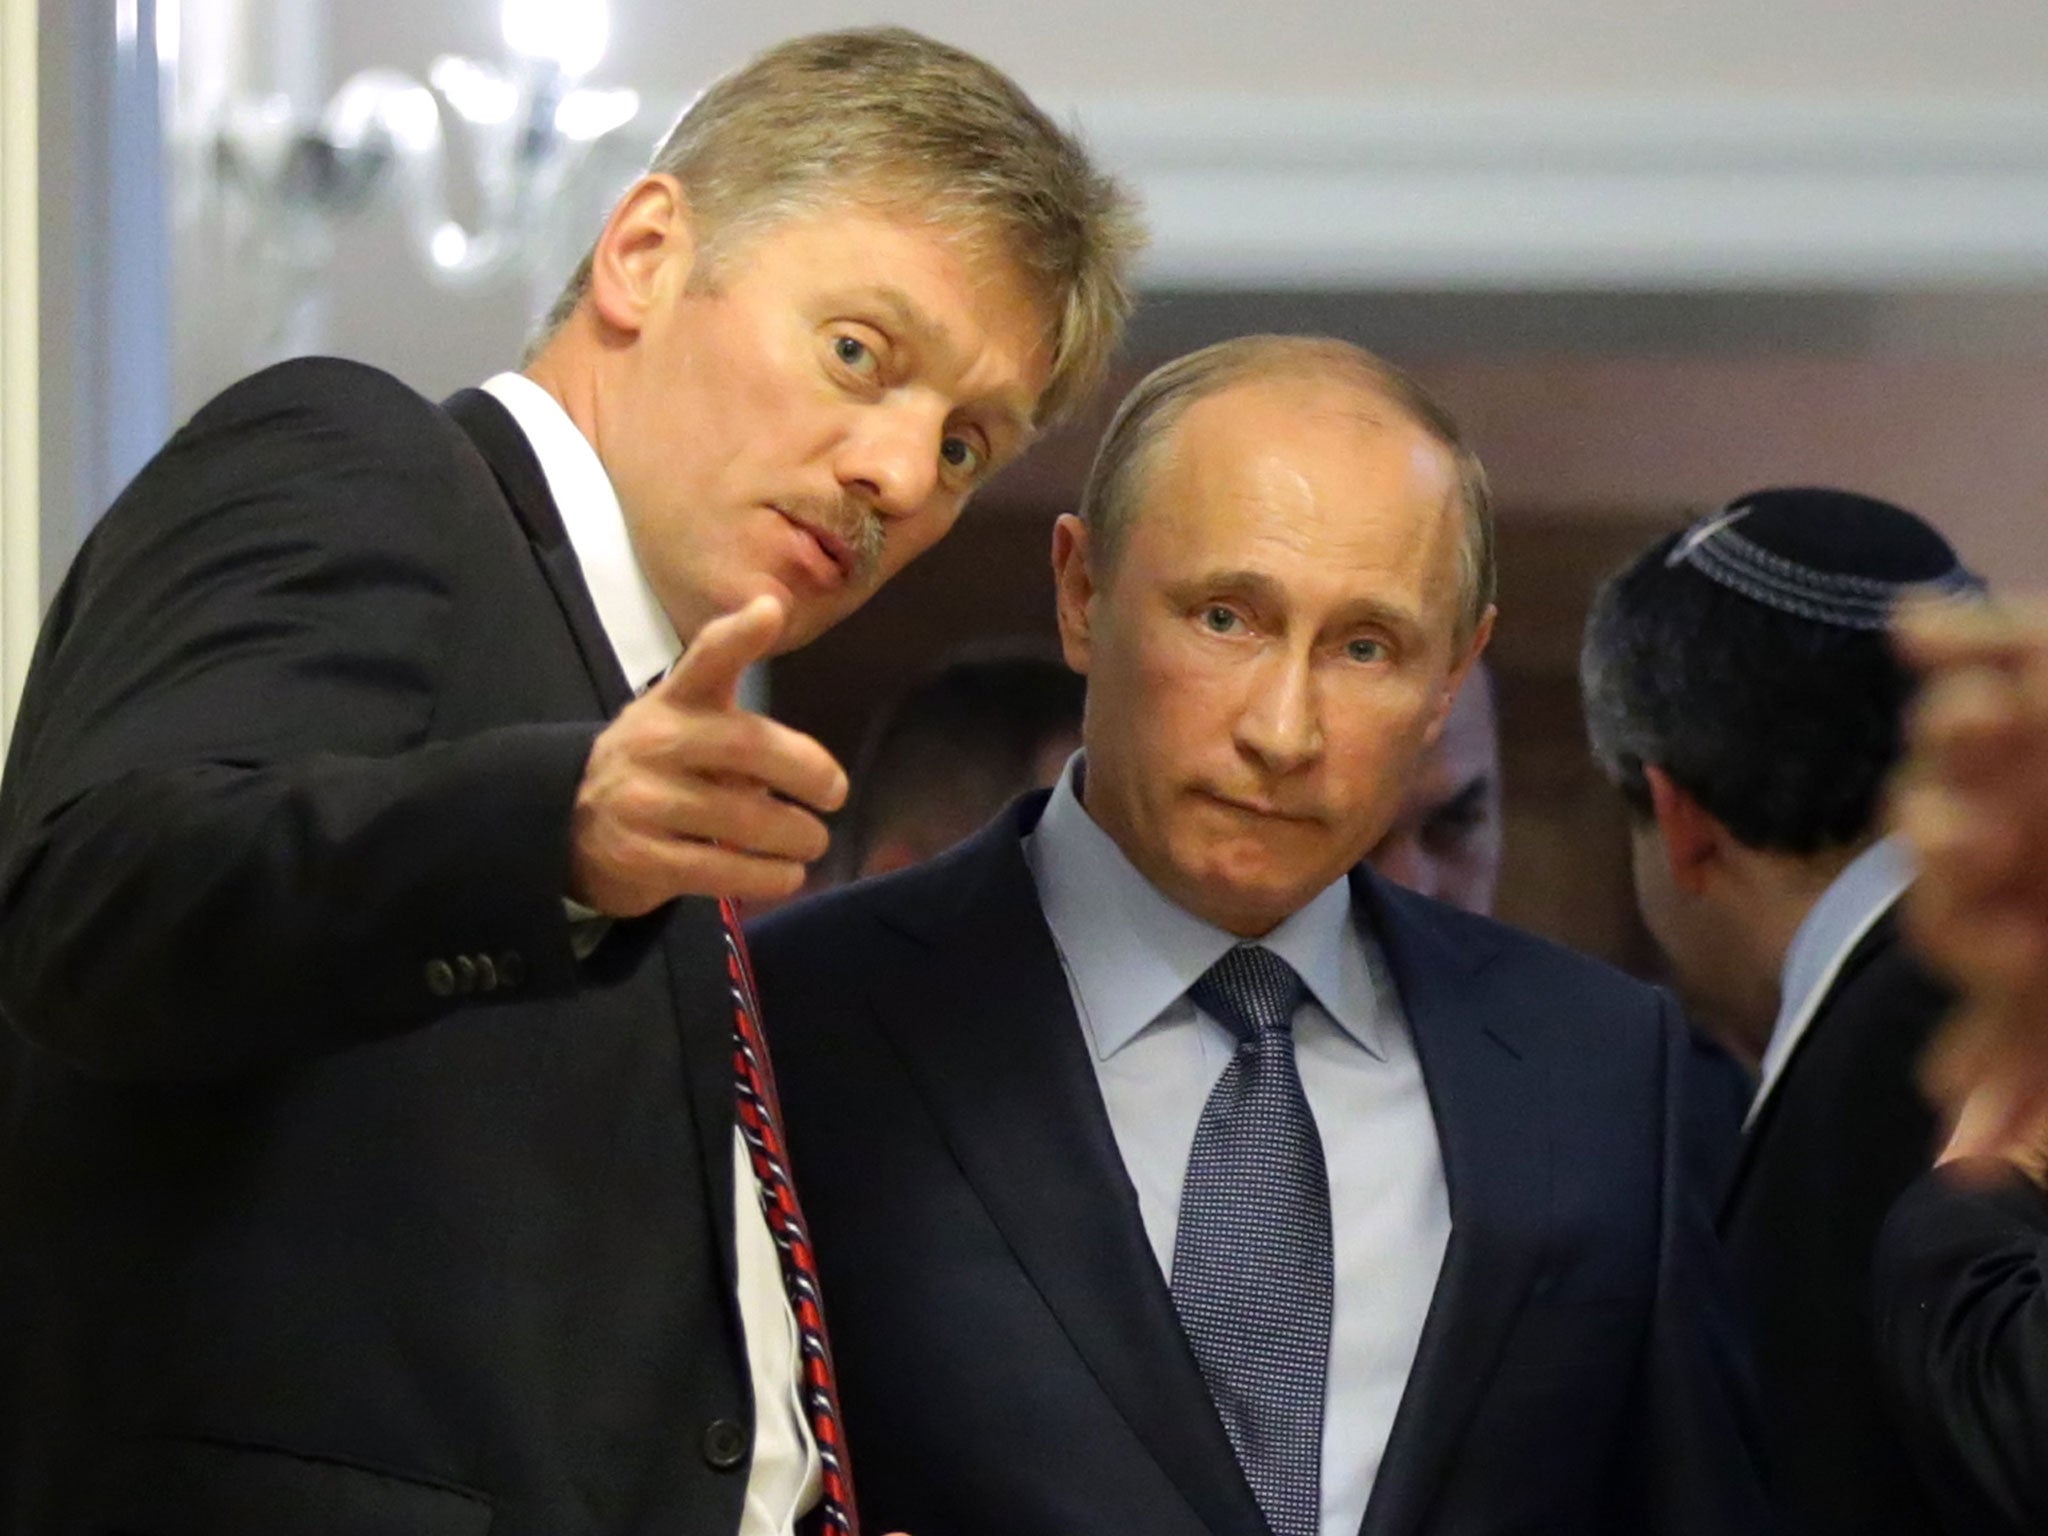 Dmitry Peskov is President Putin's chief spokesman